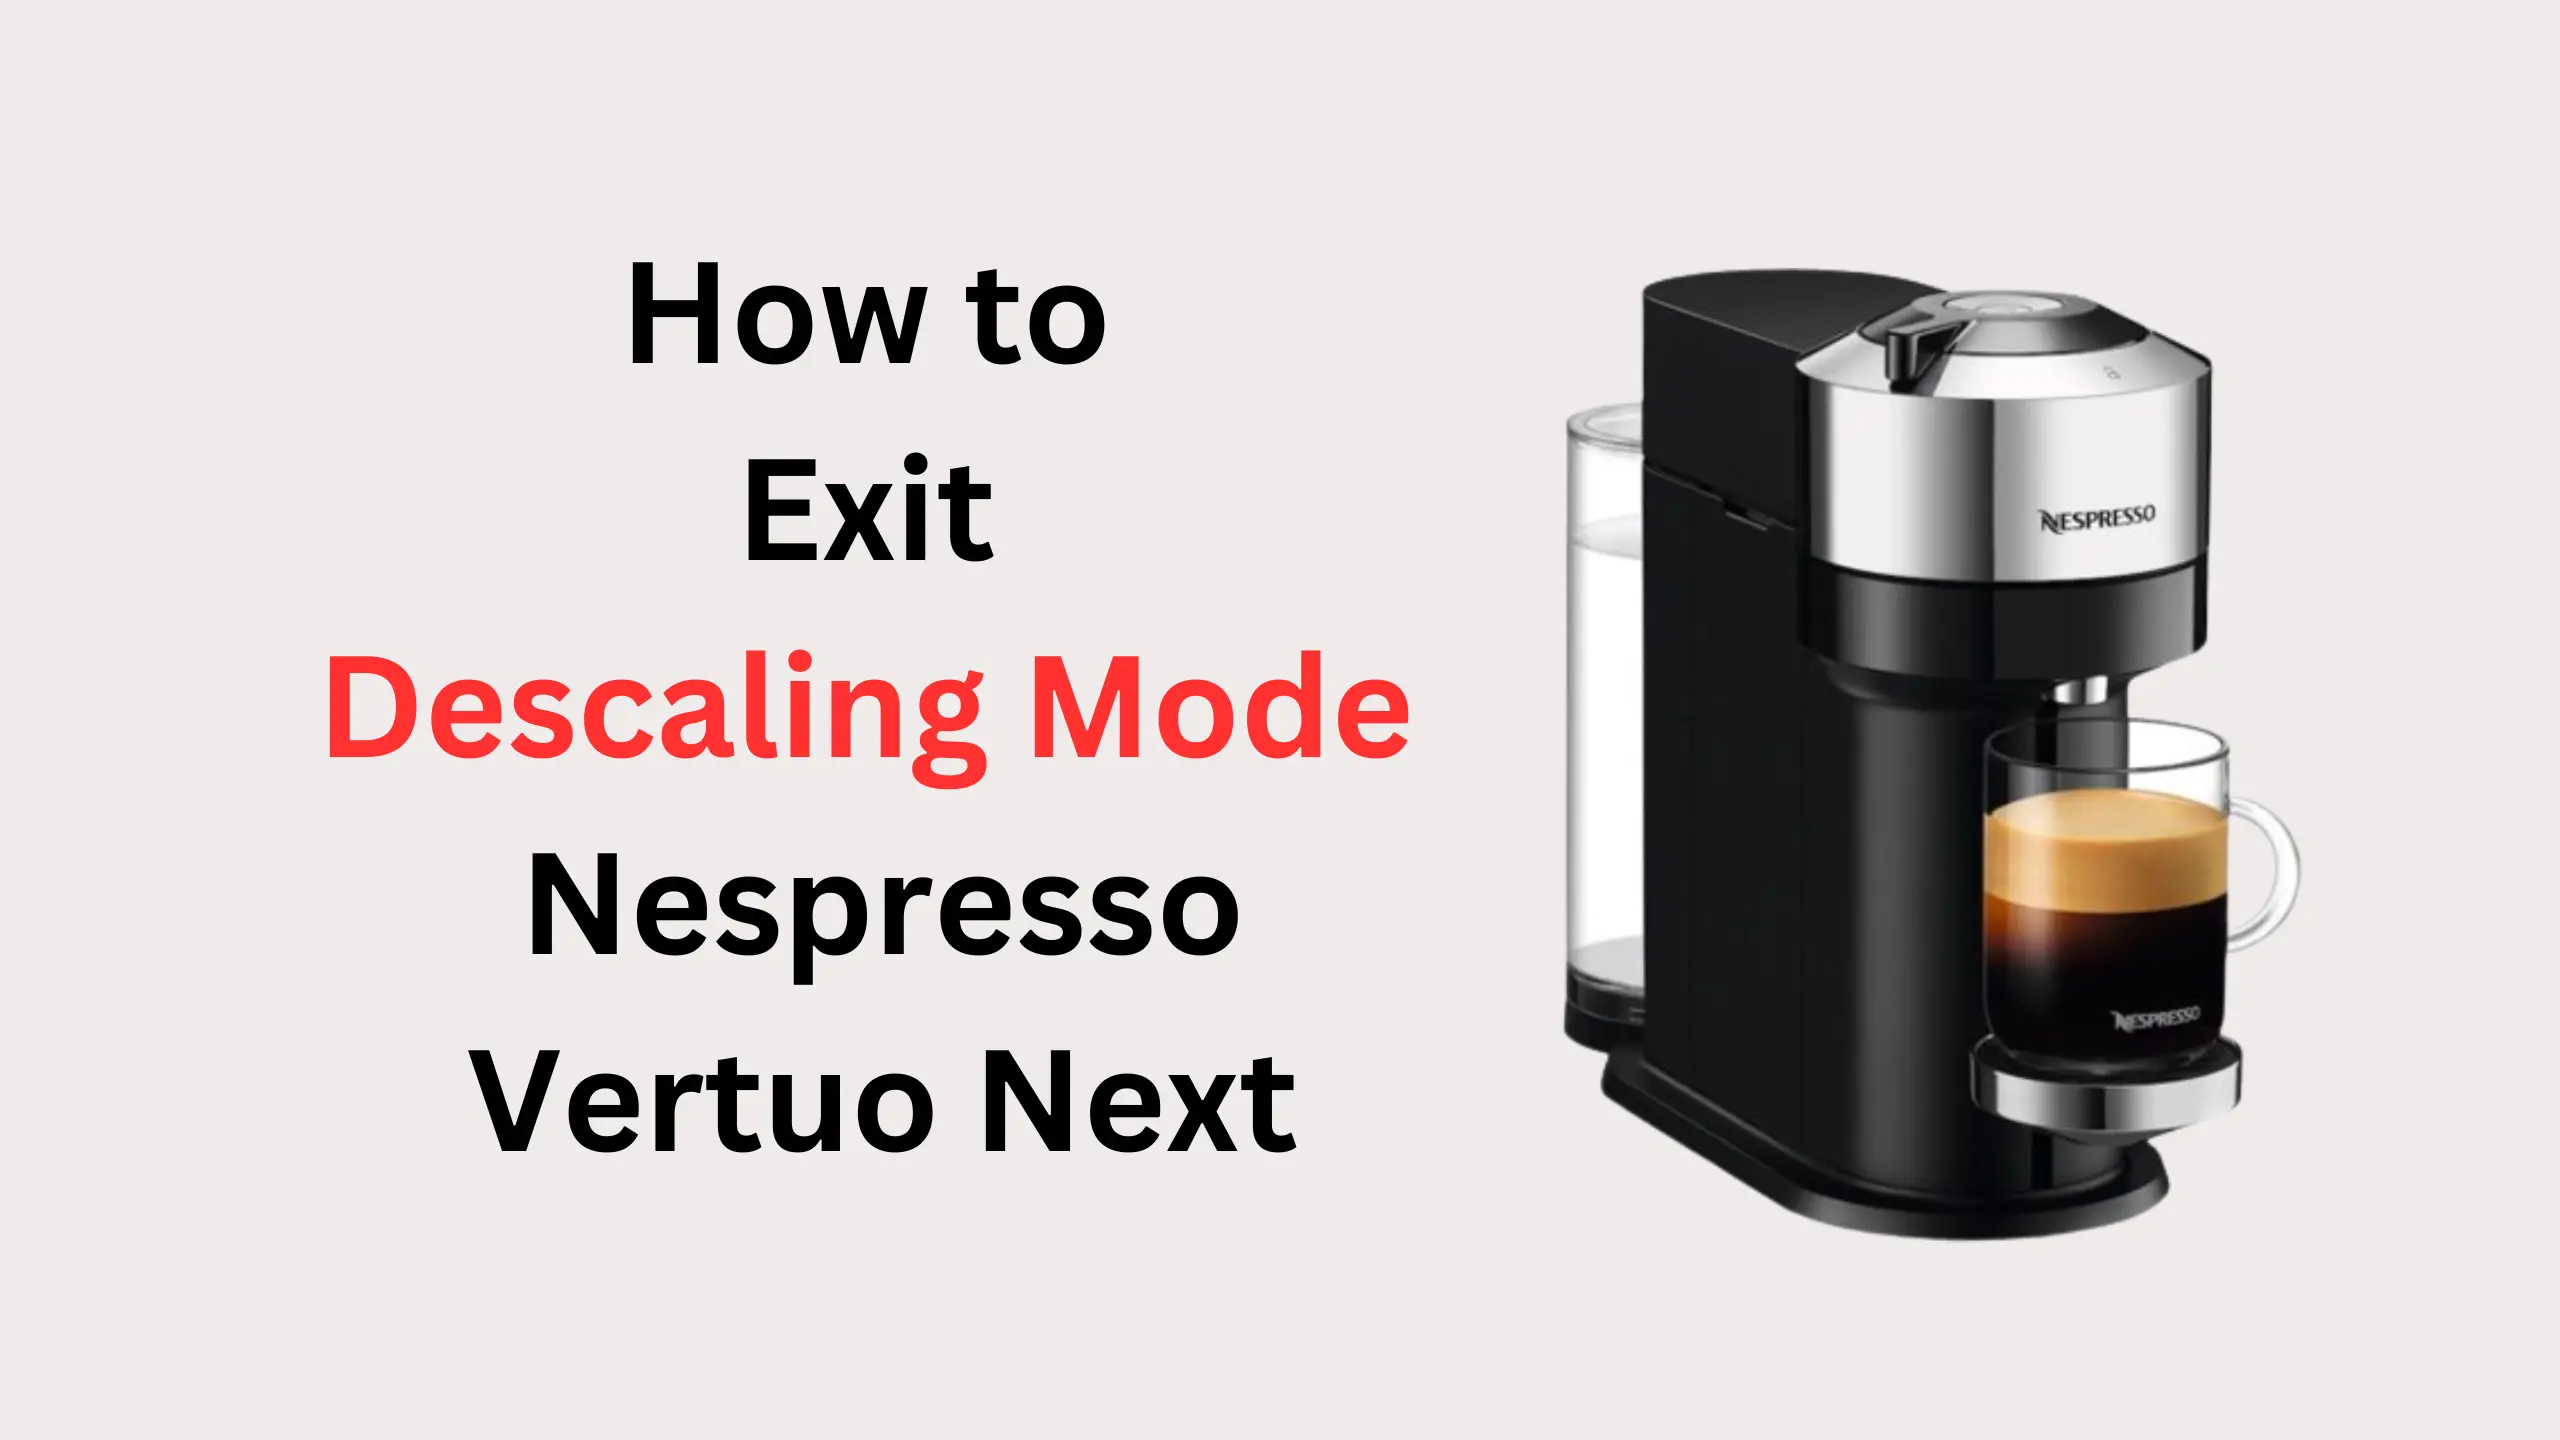 exit descaling mode nespresso vertuo next